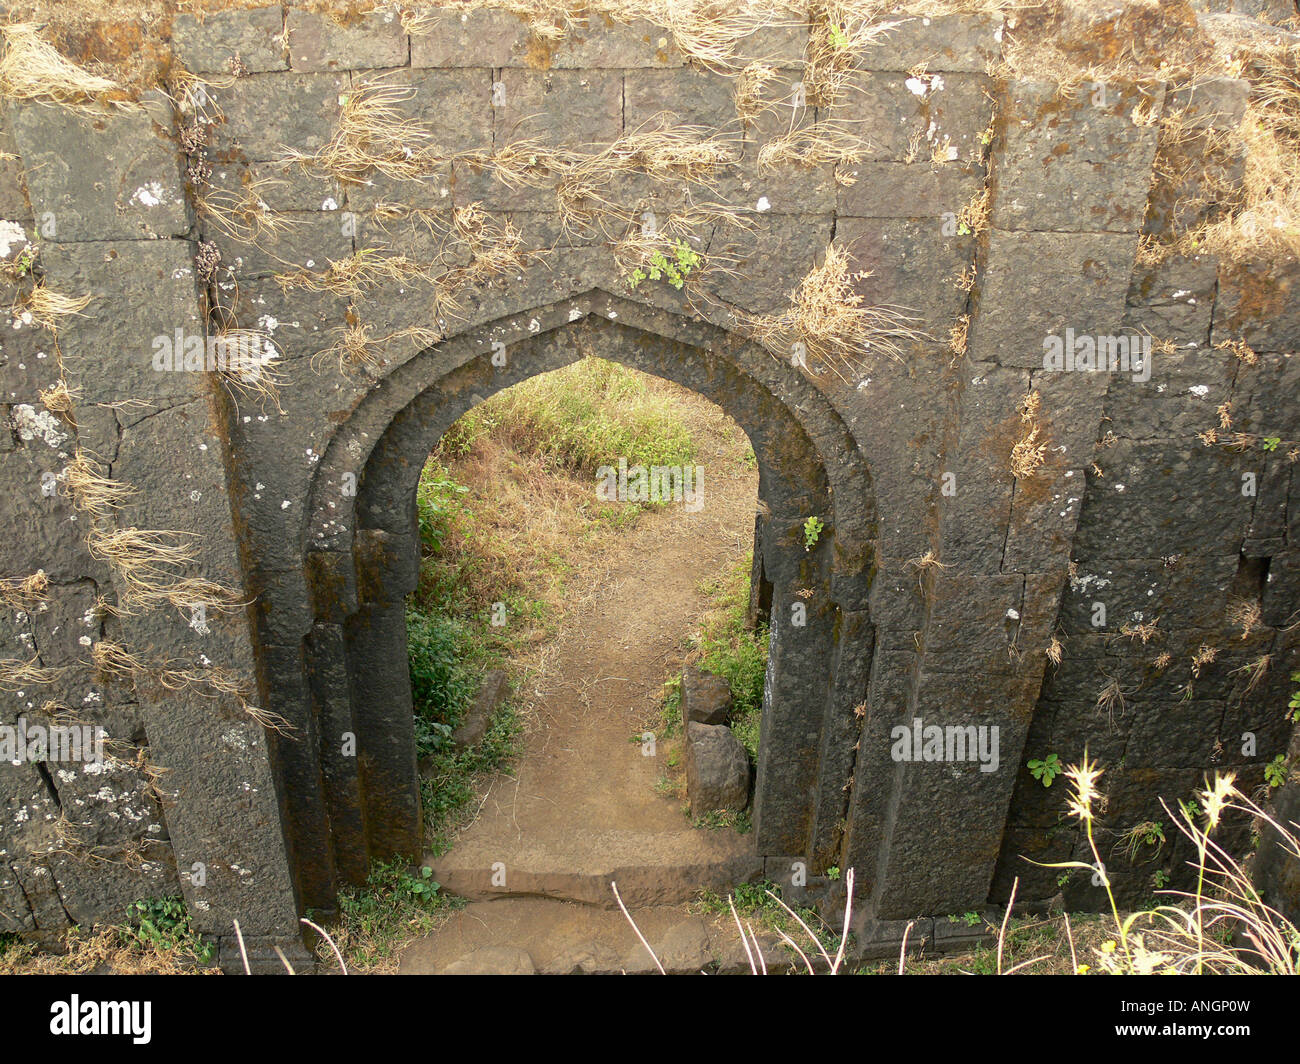 Torna Fort - Prachandgad | Torna Gad Maharashtra Travel Guide